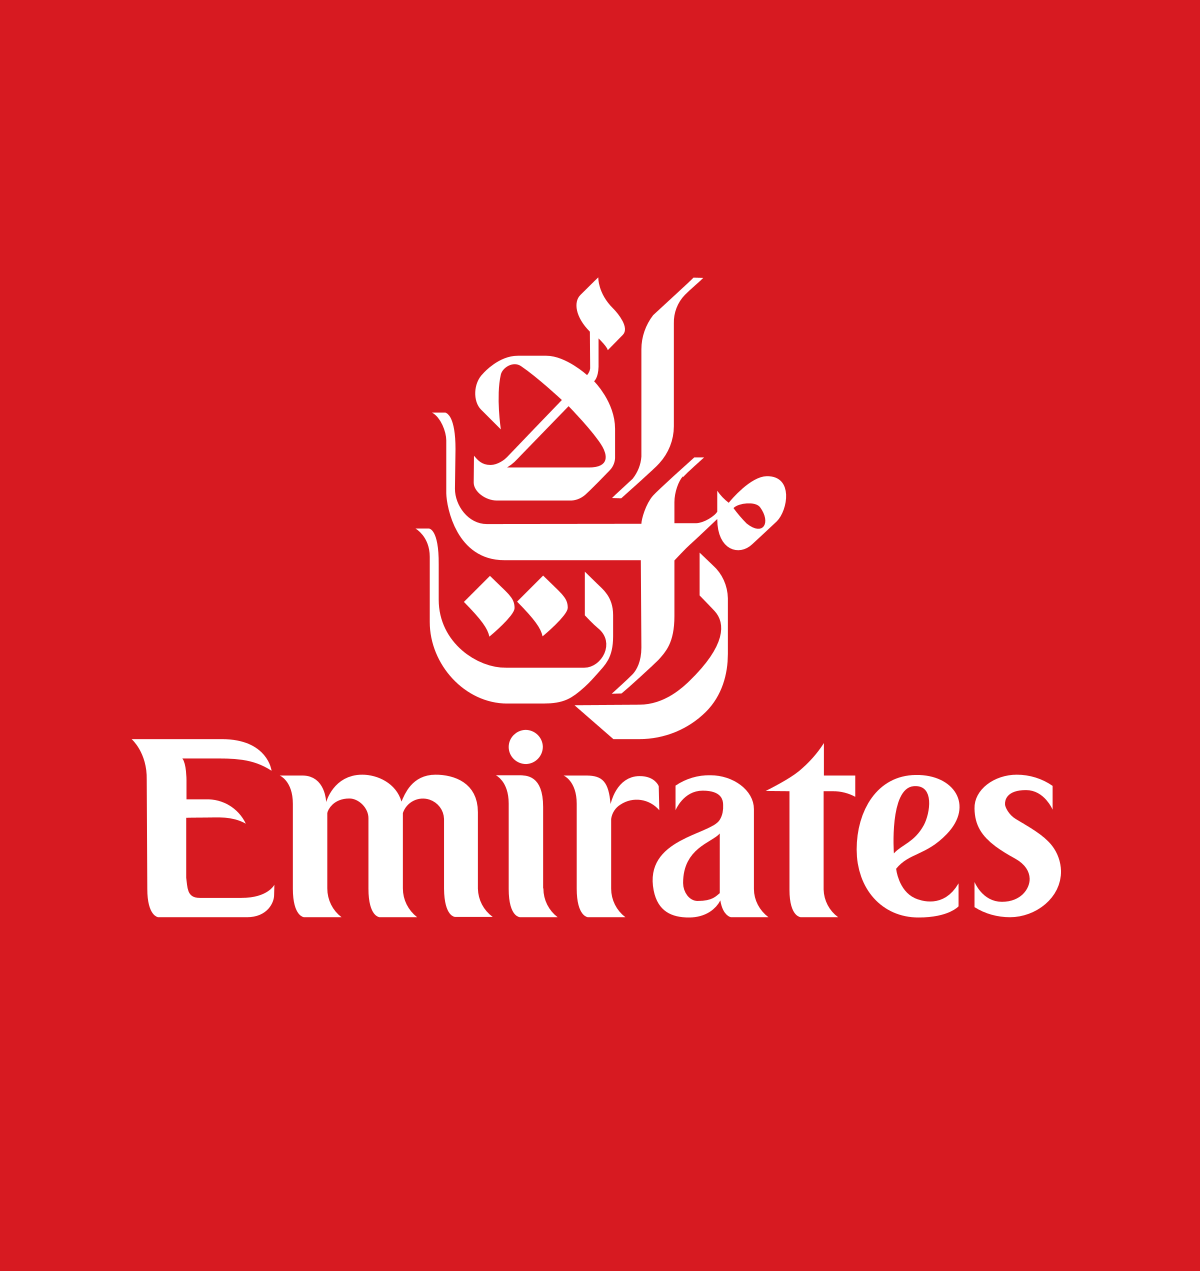 Blue Orange Red Airline Logo - Emirates (airline)